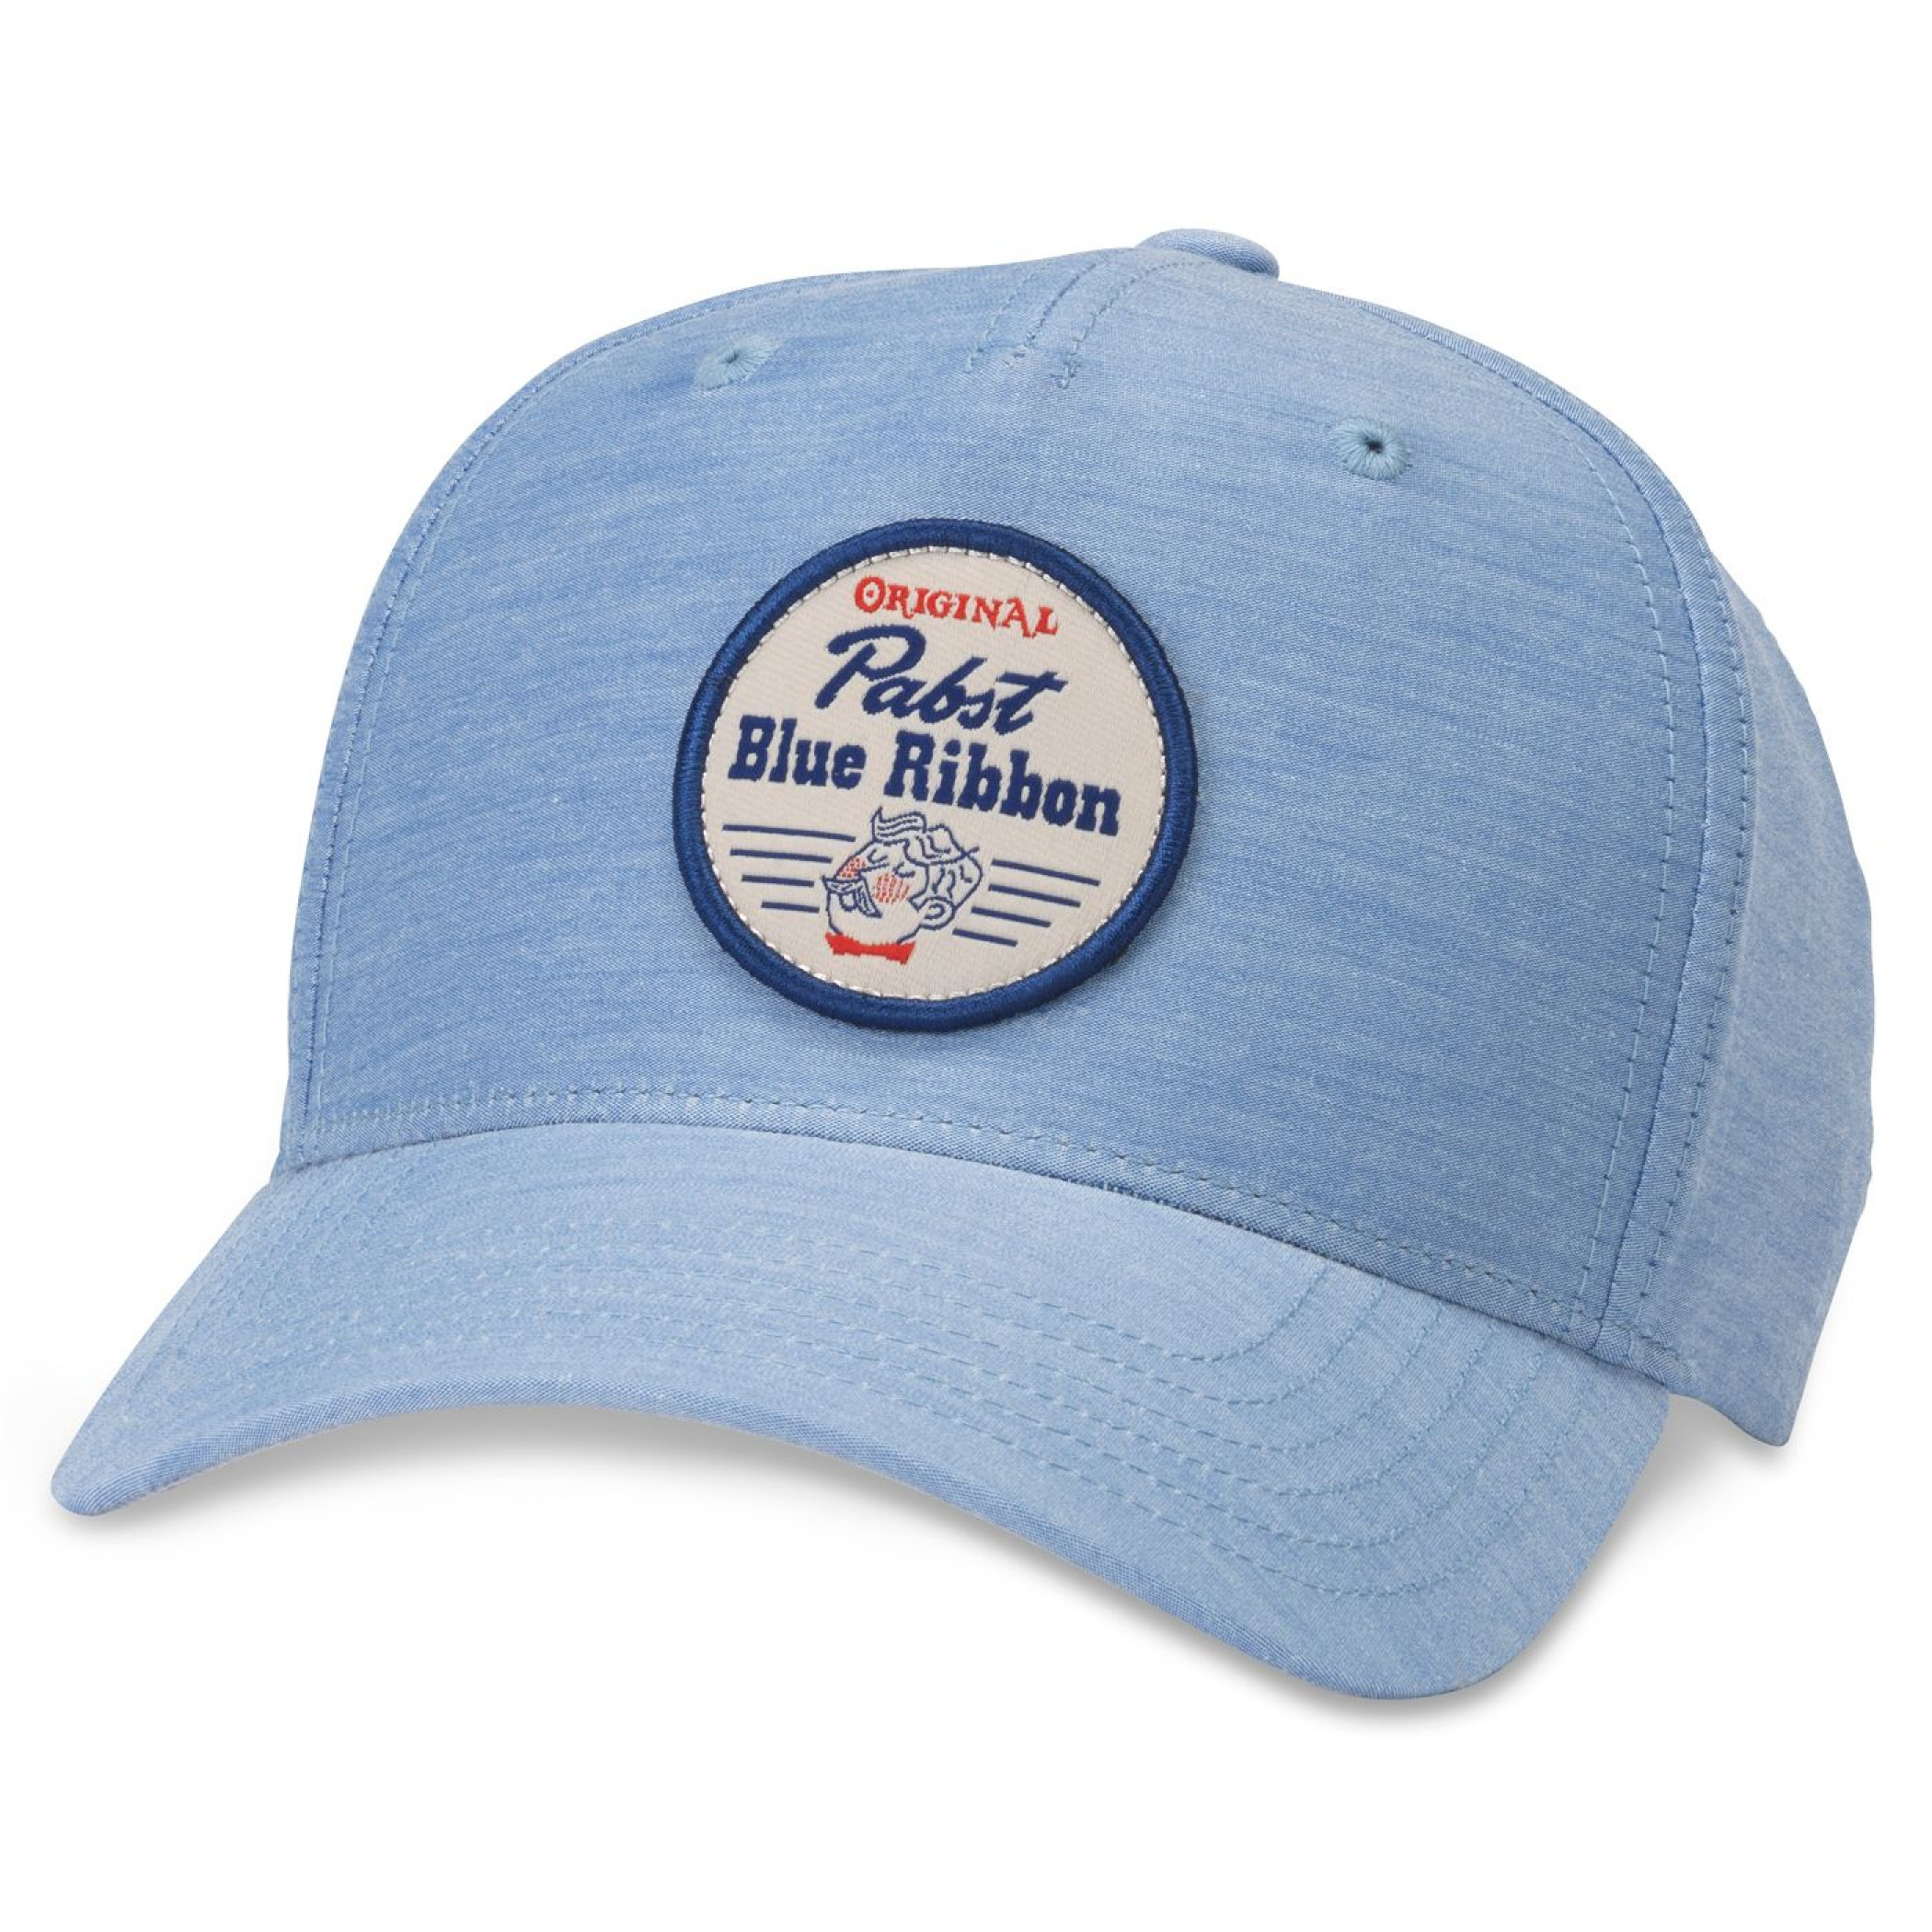 Pabst Blue Ribbon Original Patch Adjustable Hat